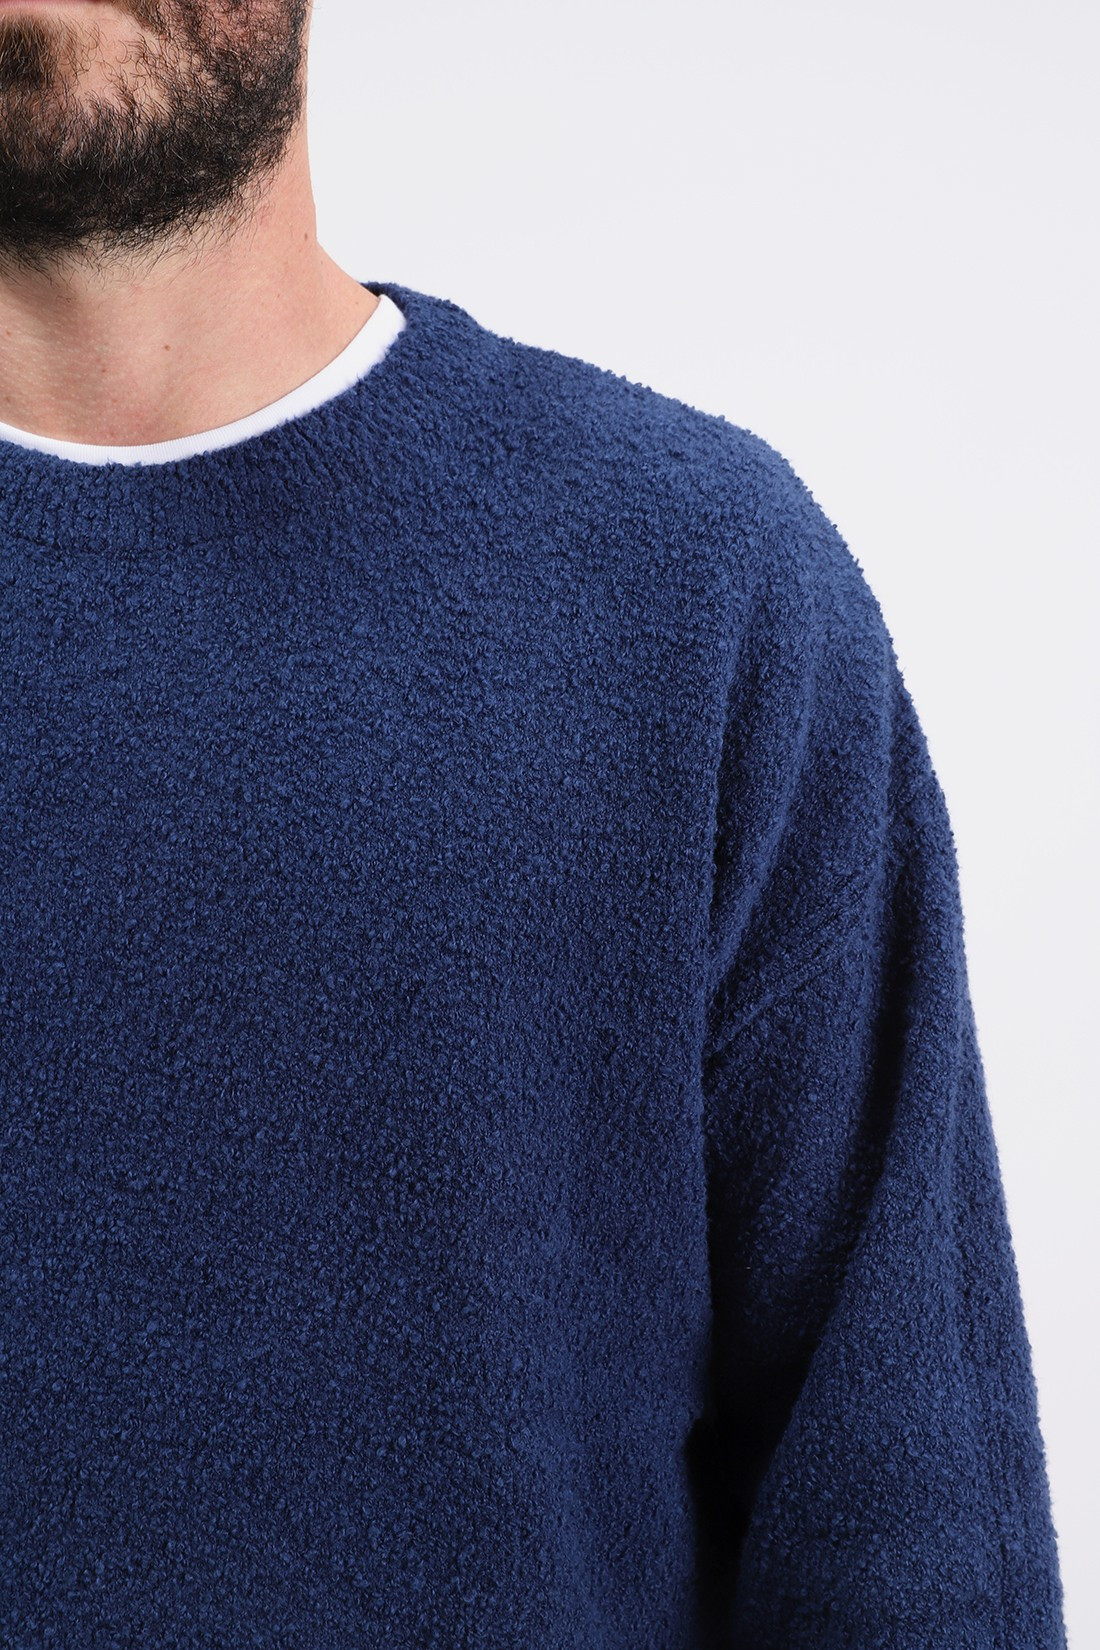 EDWIN / Bullit sweater knit Navy blazer